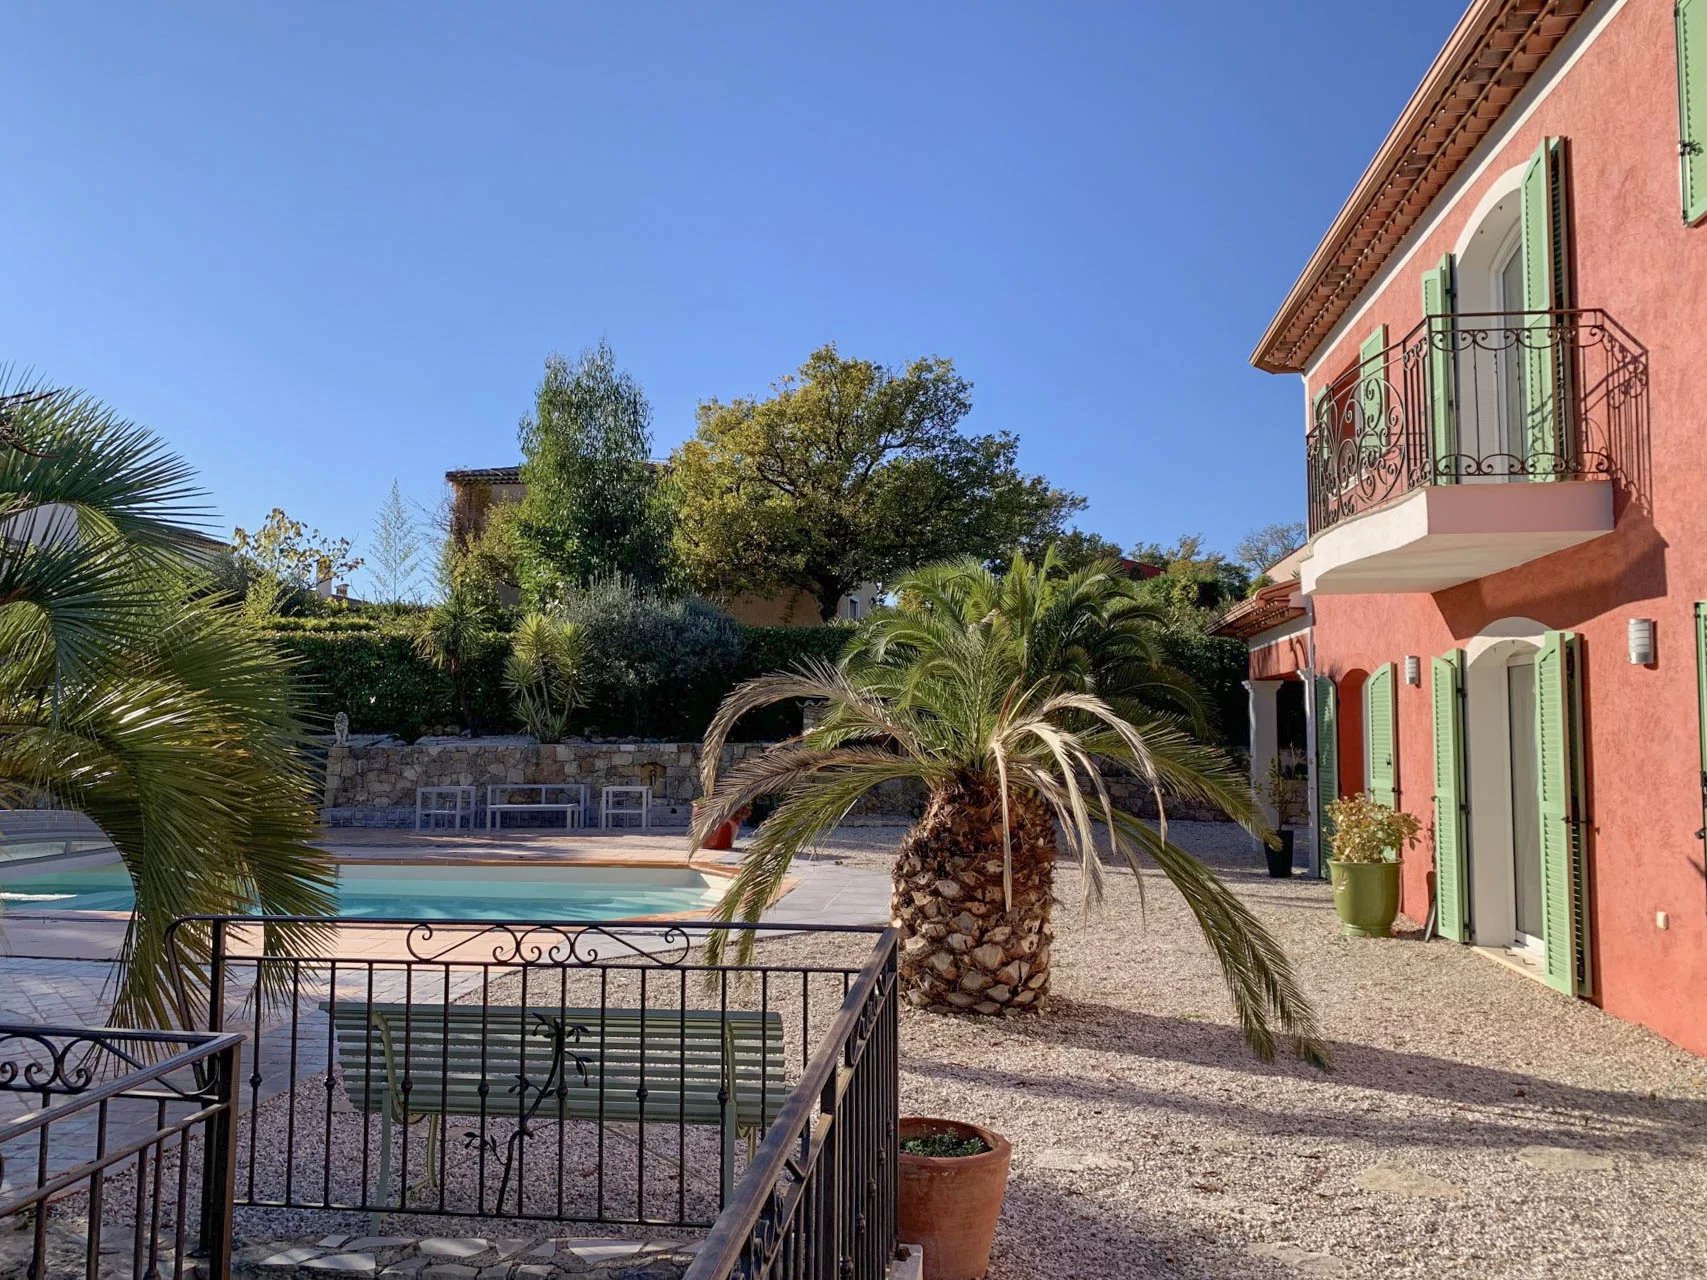 Quality villa with pool - Montauroux